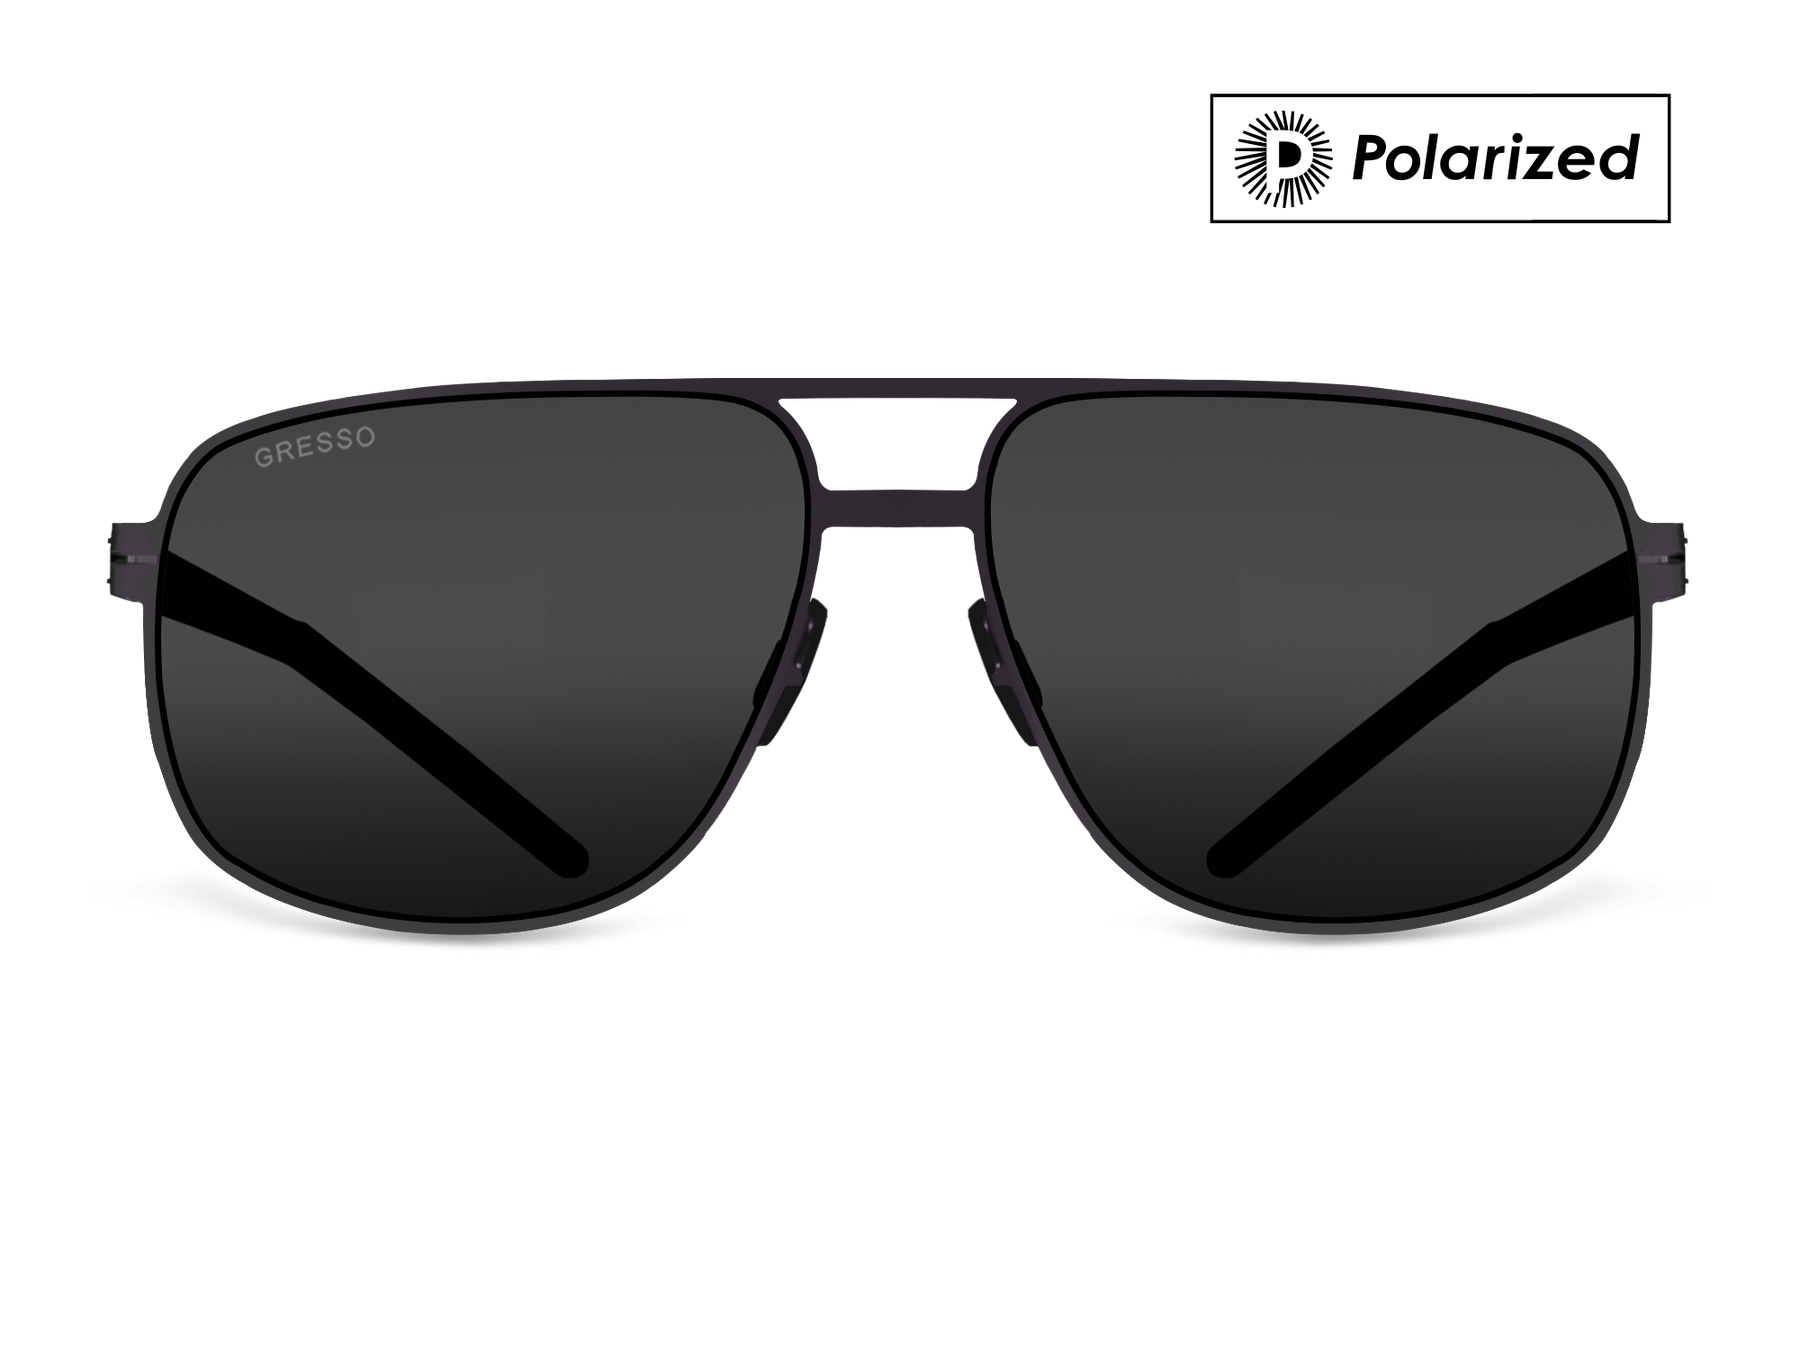 GRESSO Titanium Polarized Aviator Sunglasses - Manchester, grey-polarized